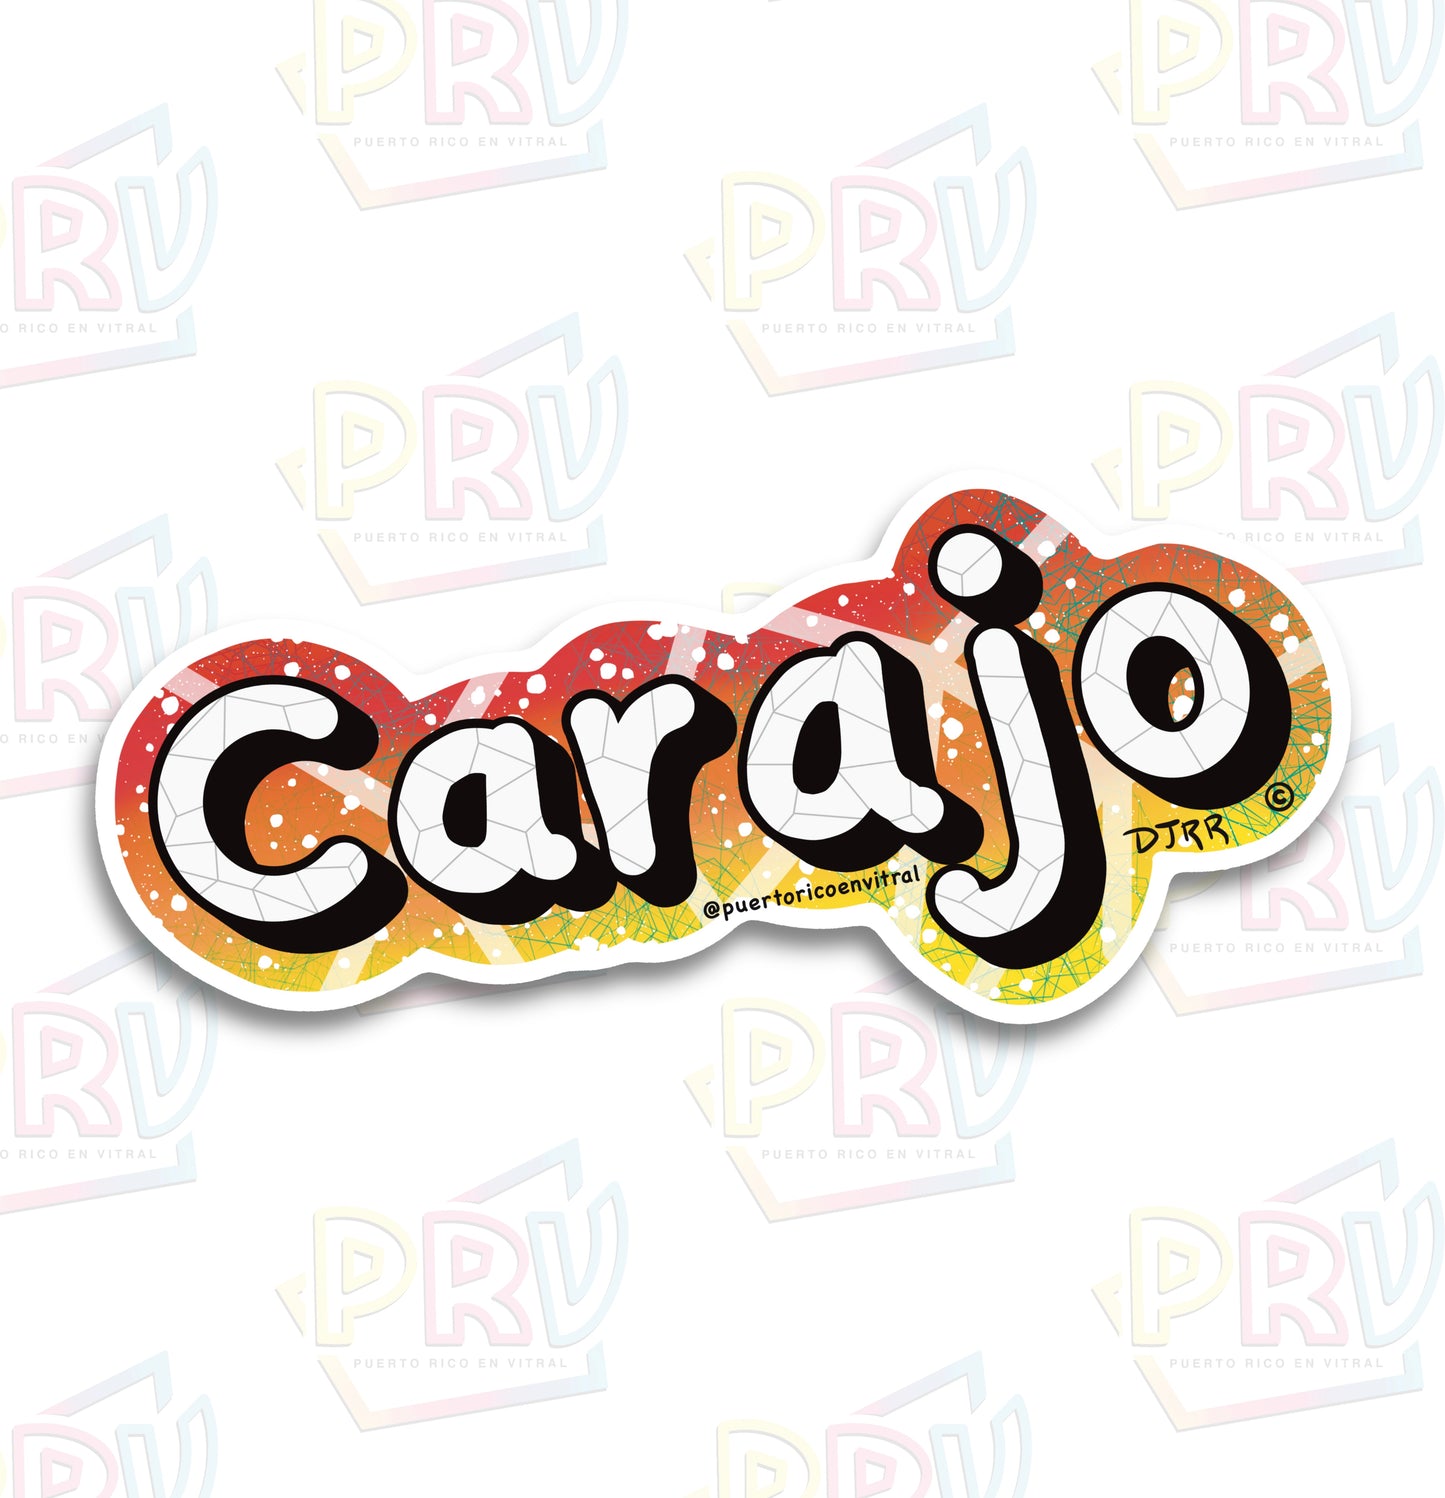 Carajo (Premium Sticker)